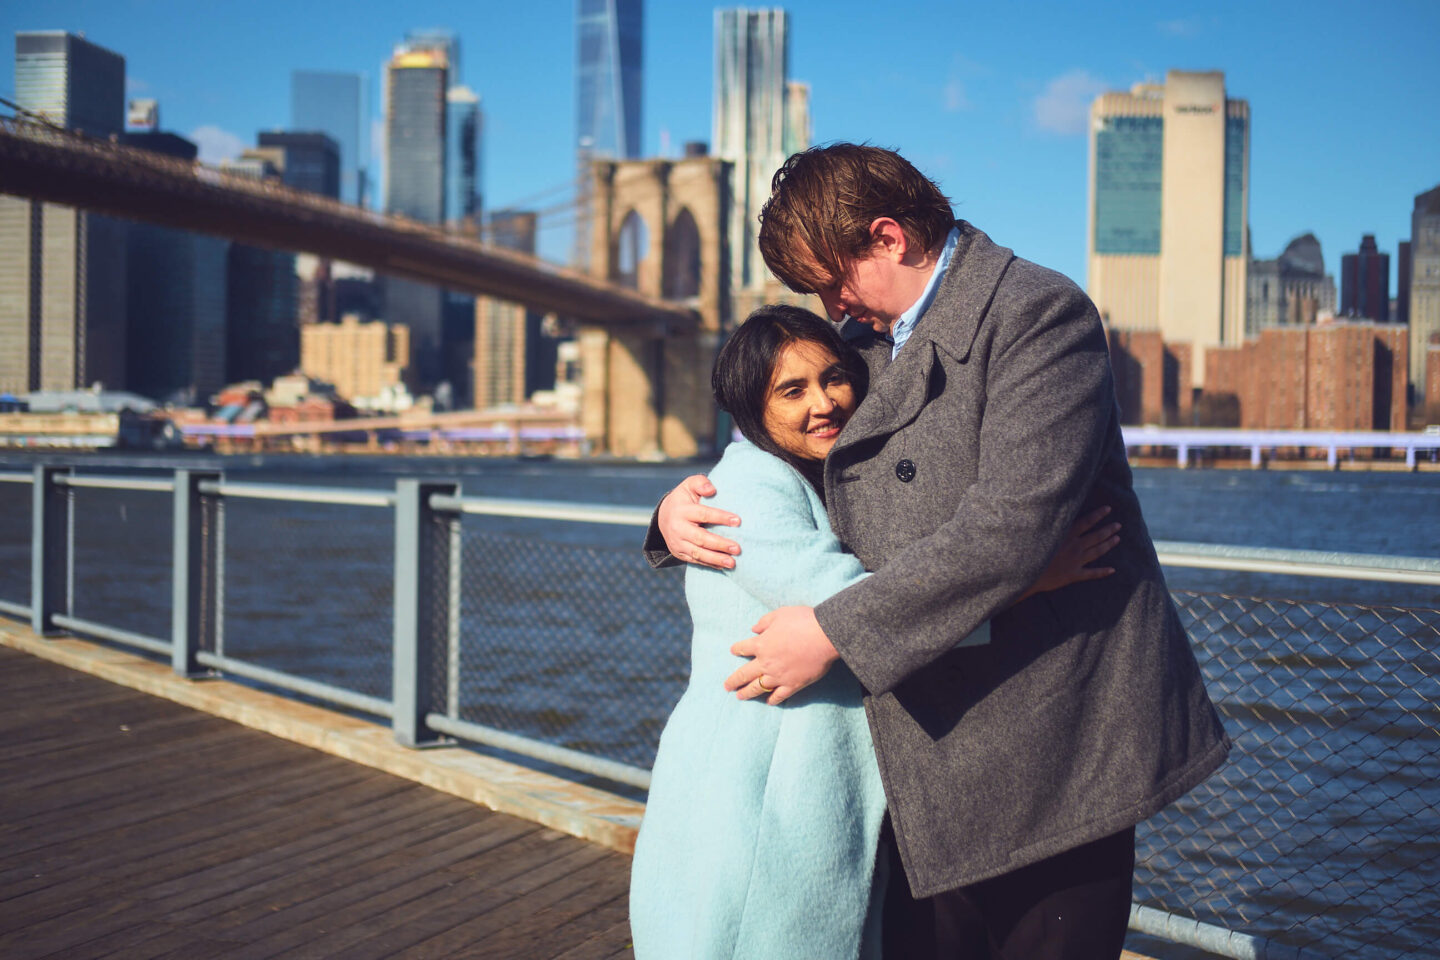 Flora - 1 Year Wedding Anniversary Photoshoot - Couples photography - Portrait Session - Dumbo Brooklyn Bridge Park - New York 